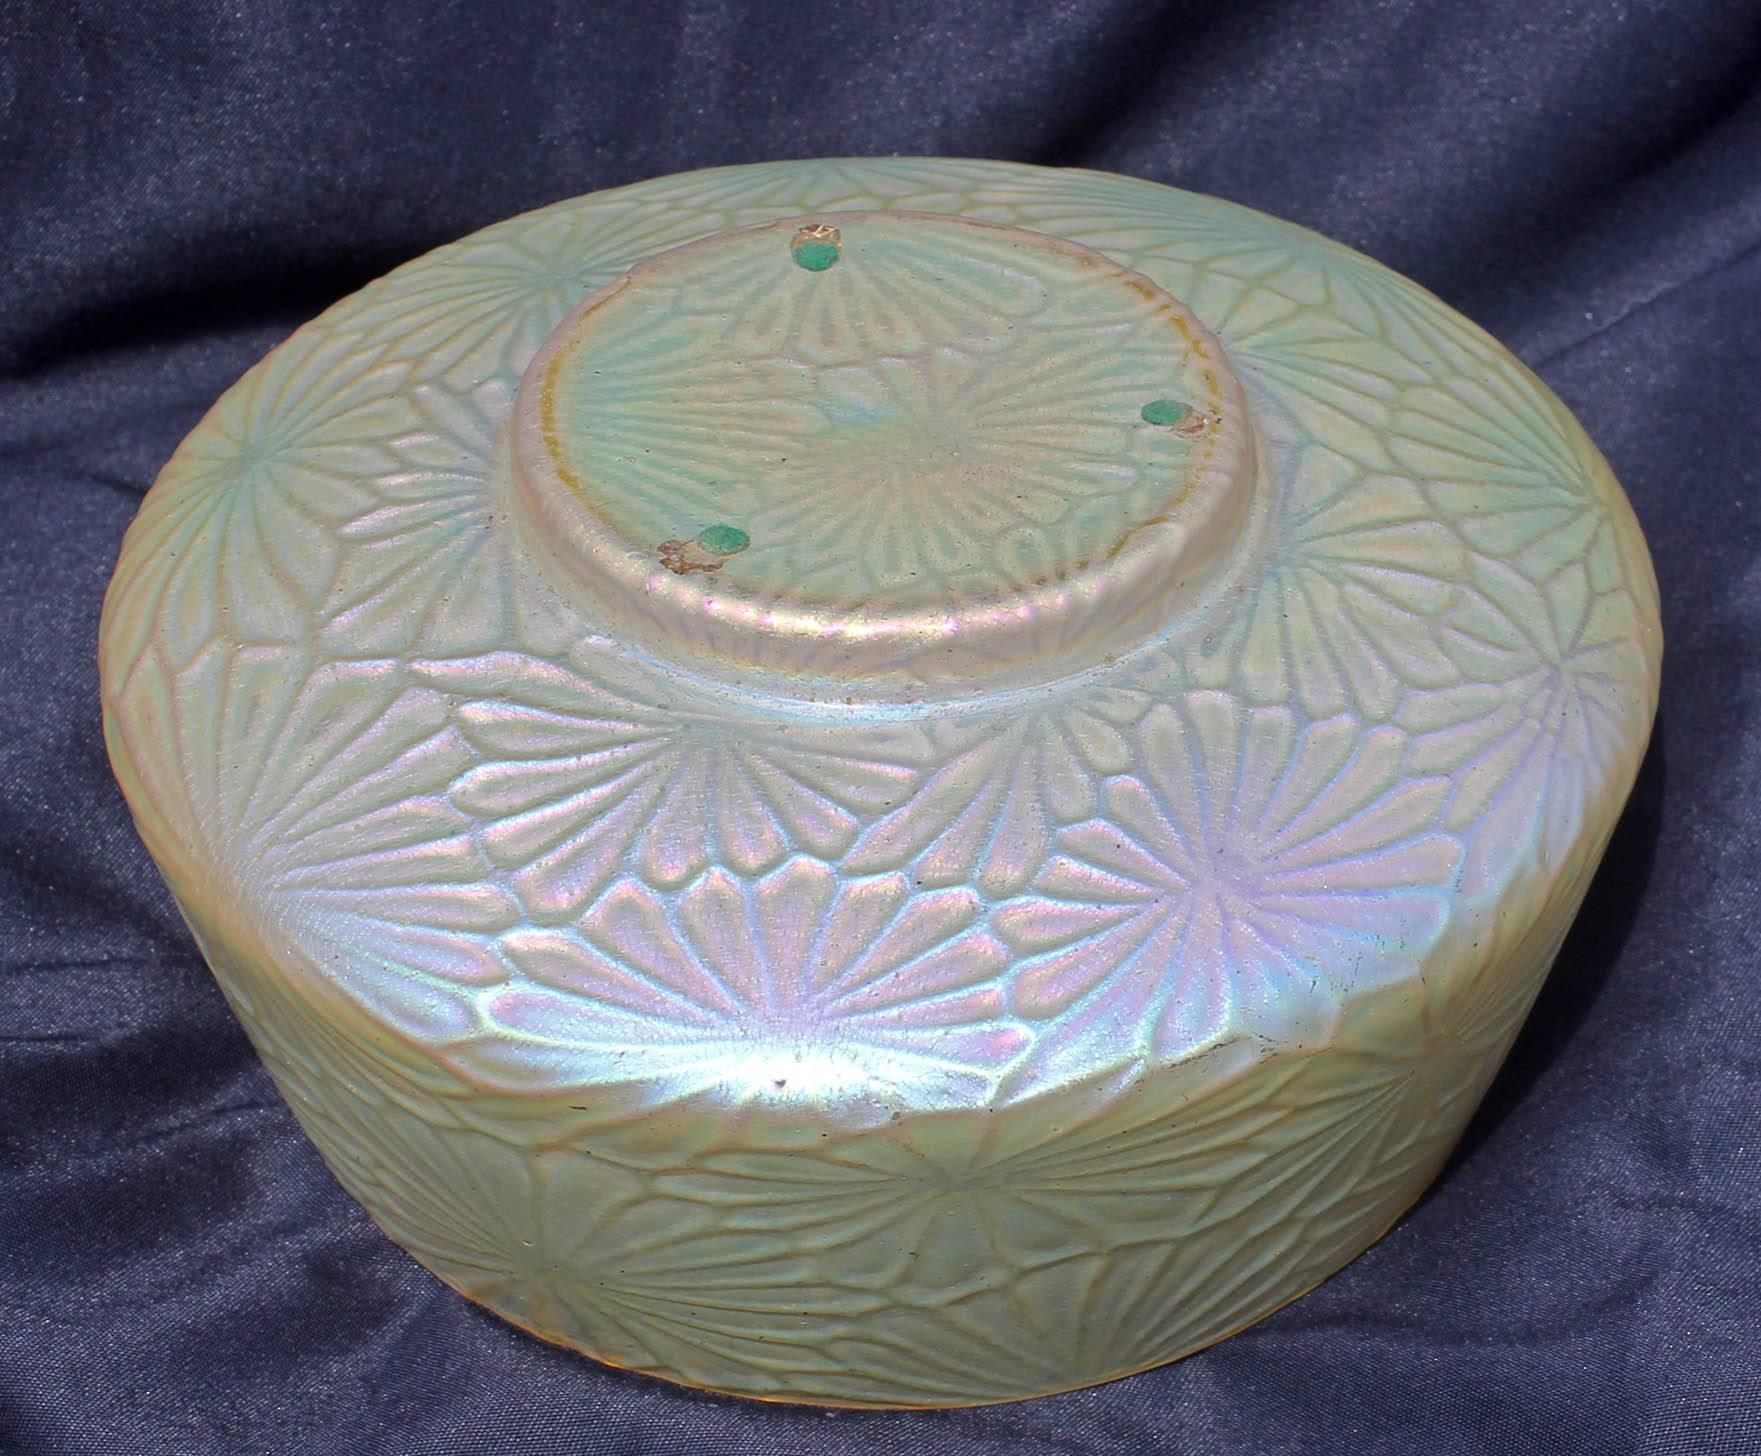 Loetz gold iridescent art glass bowl. Lily pad motif. Circa 1900.